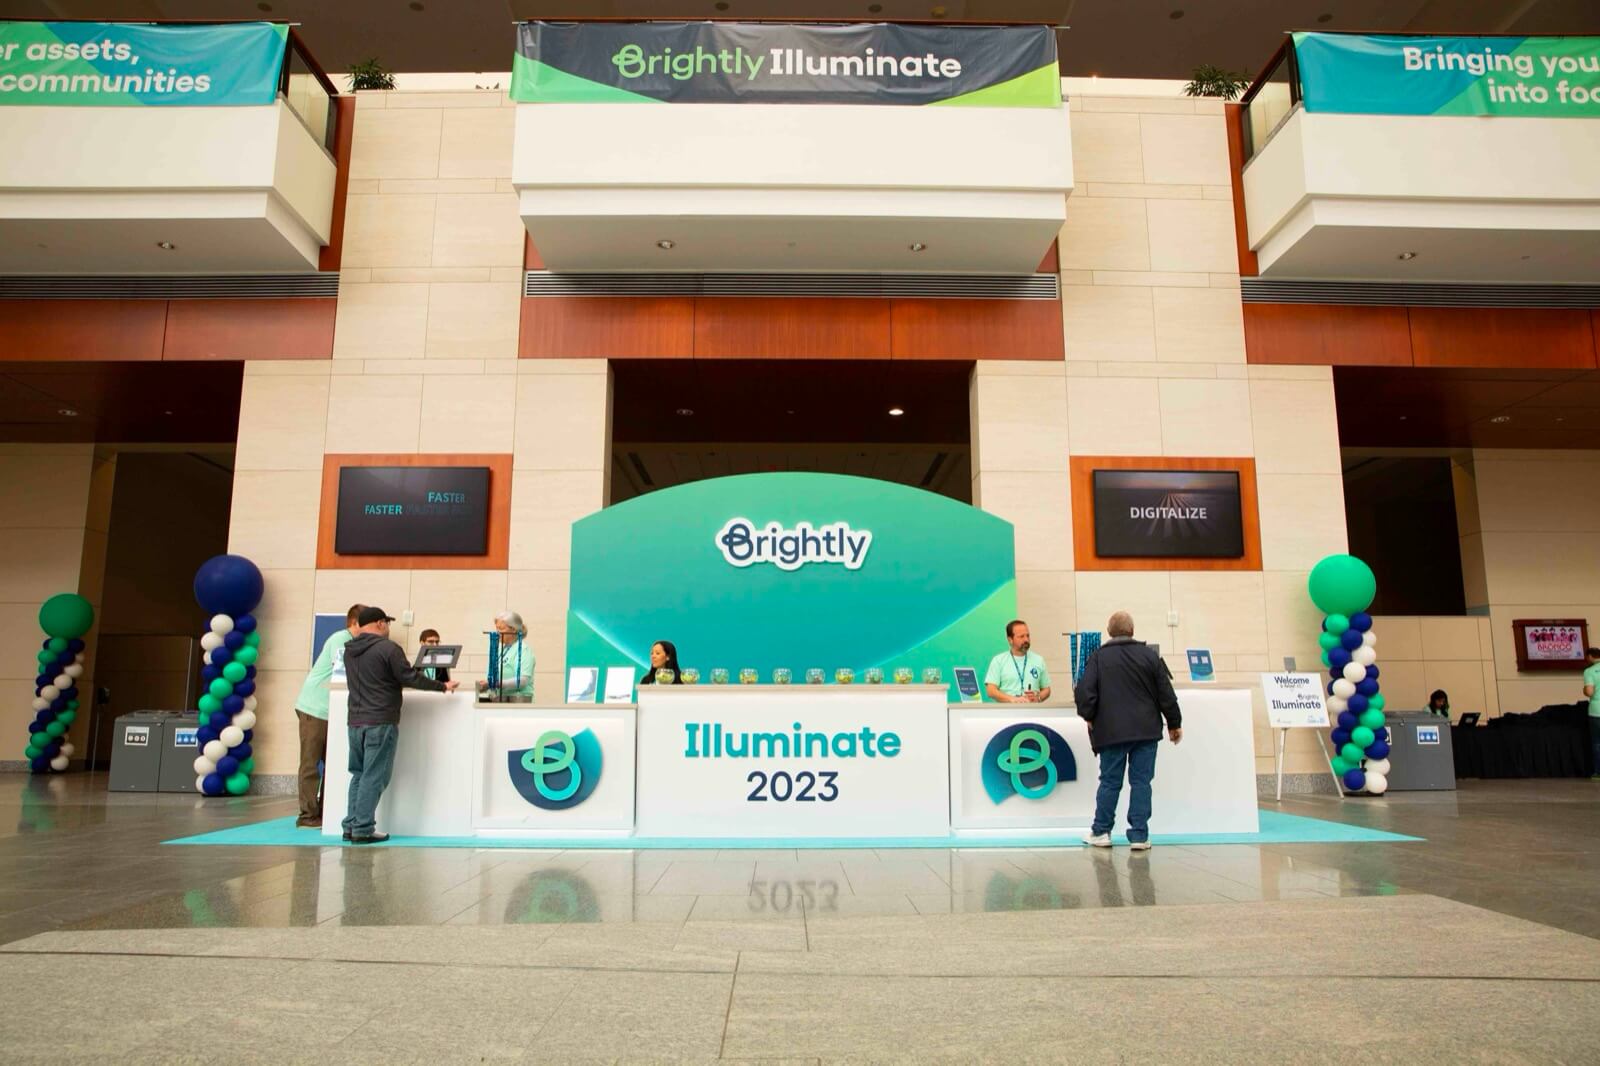 Brightly, Illuminate 2023 marketing display